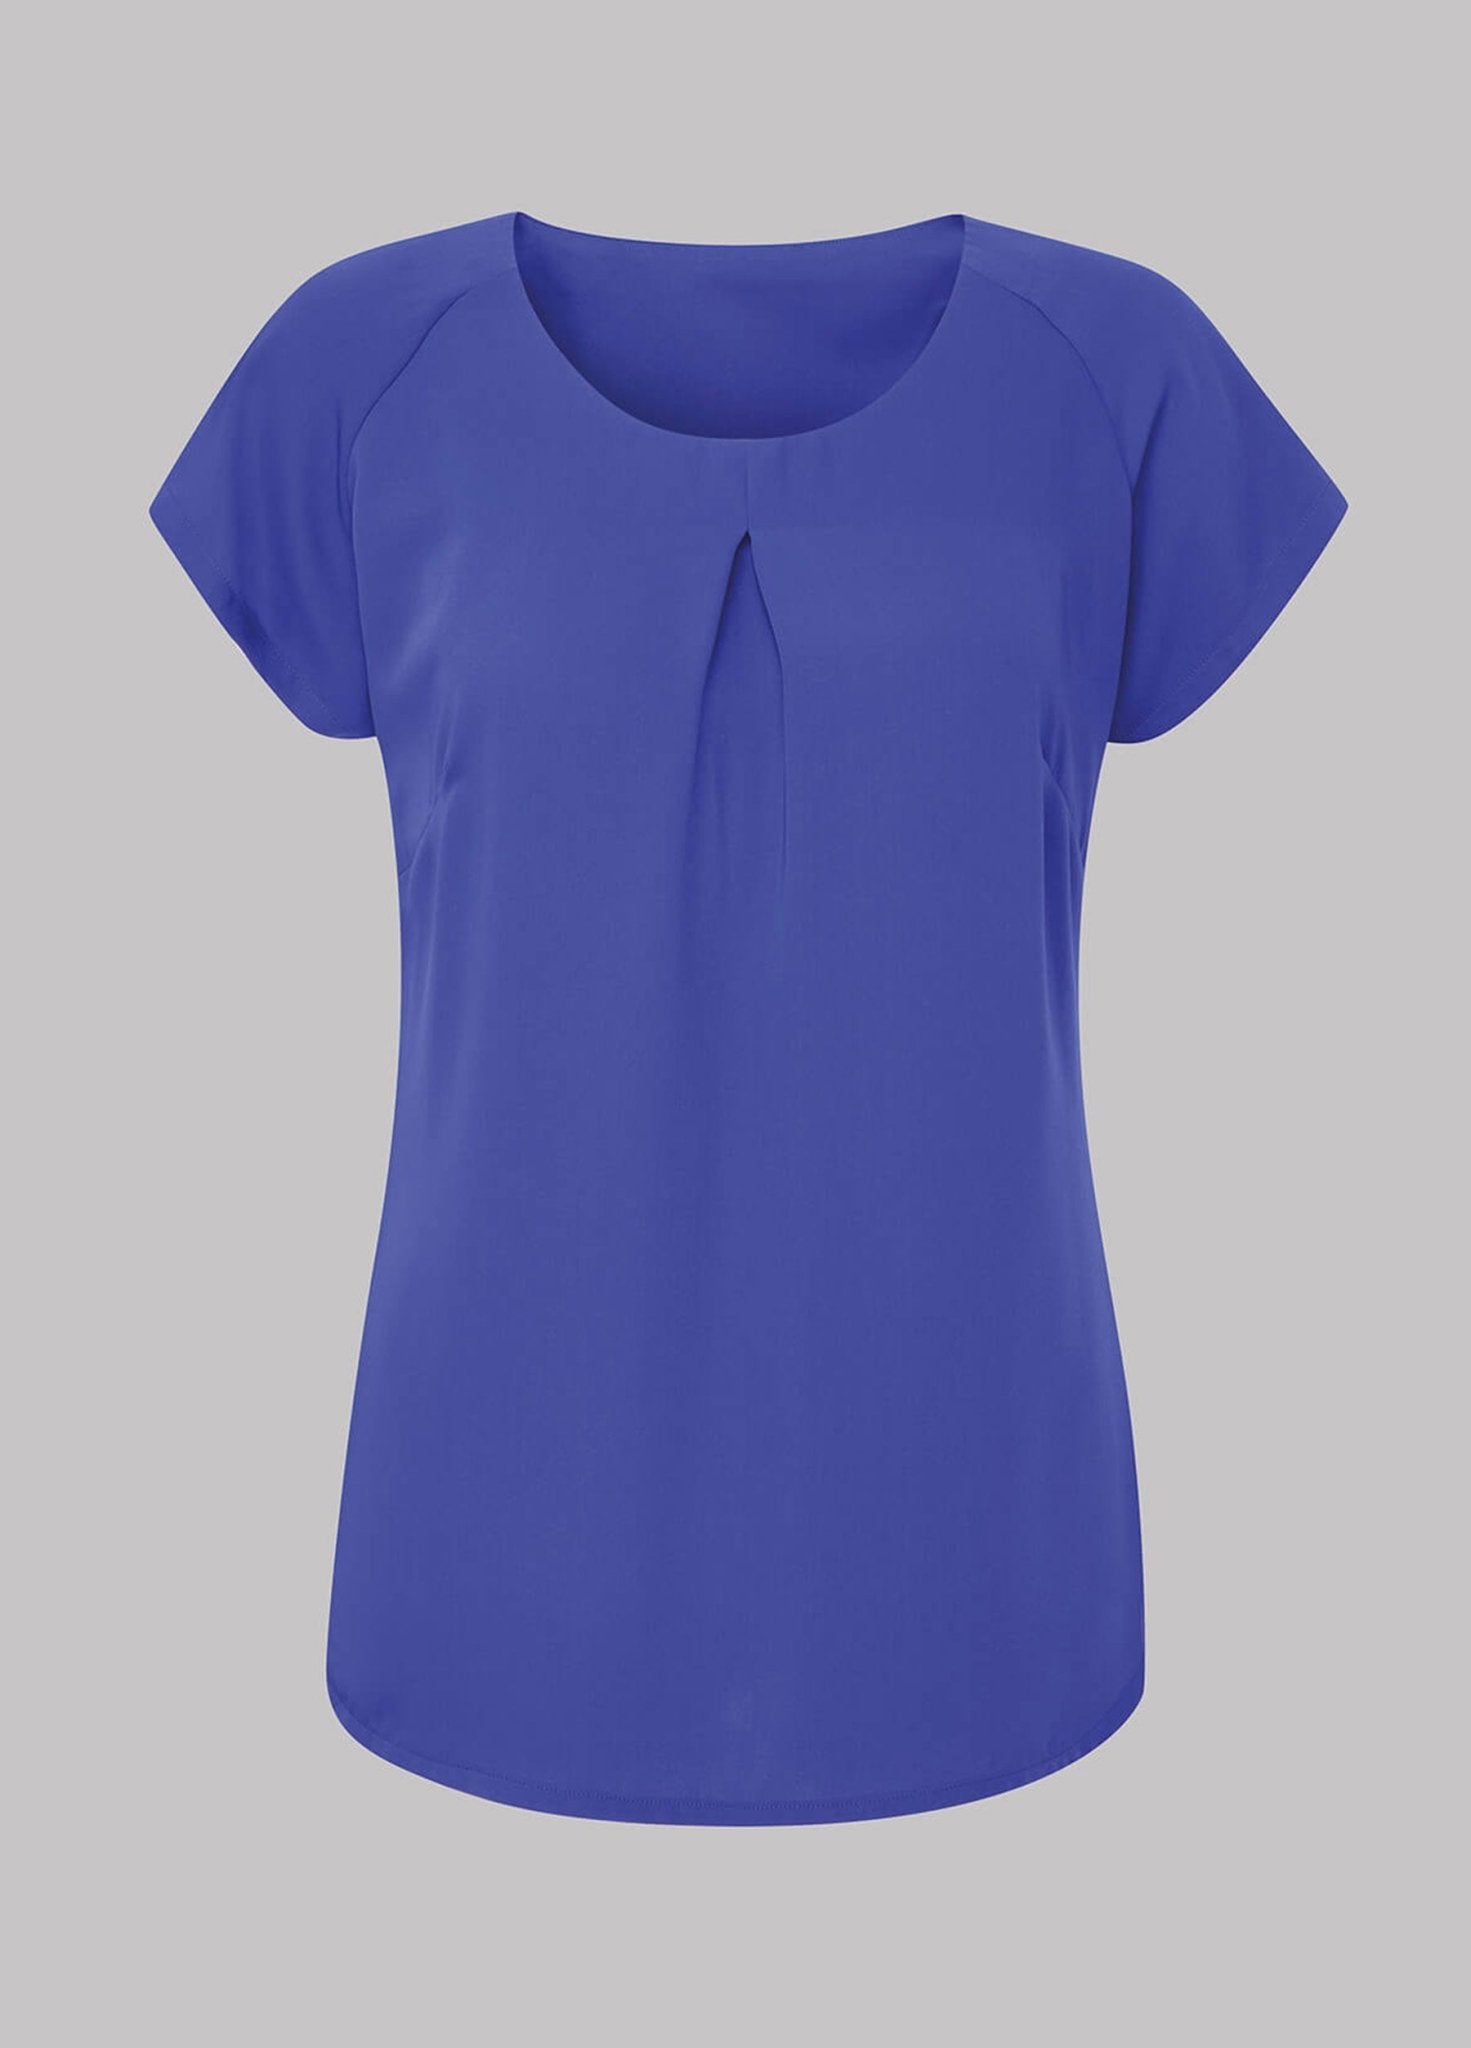 Disley Mona Round Neck Blouse Short Sleeve - The Work Uniform Company